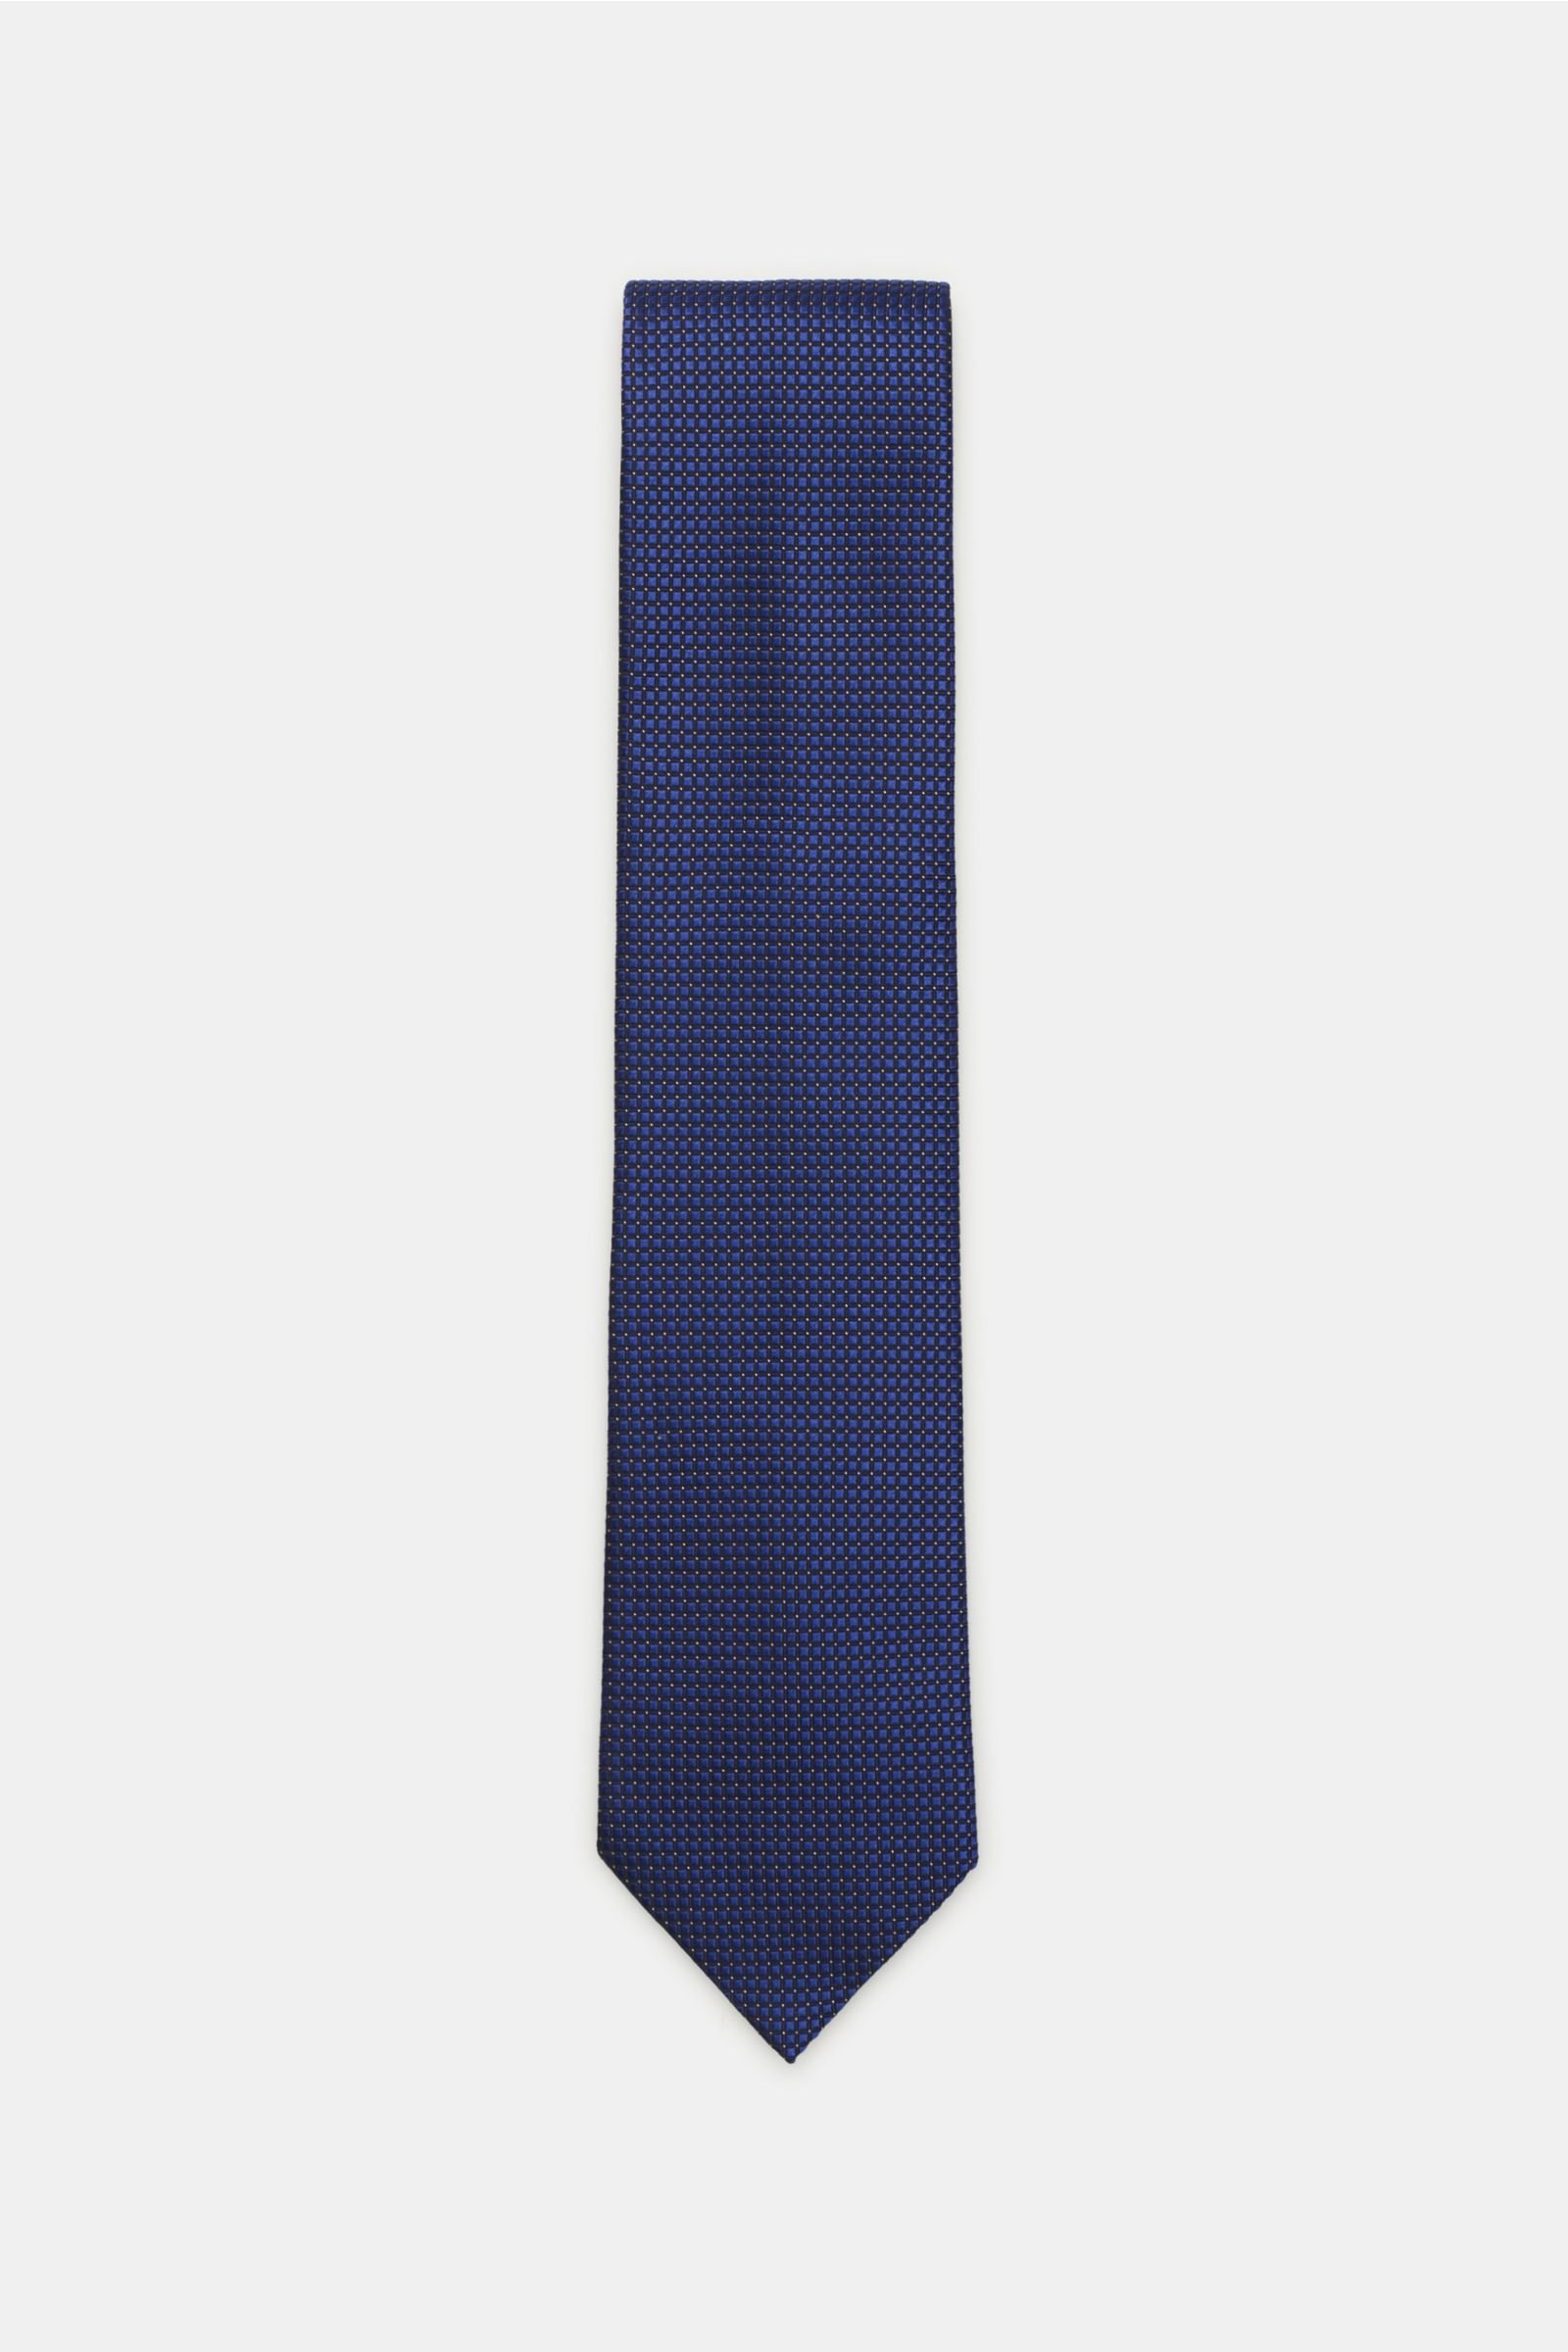 Silk tie dark blue patterned